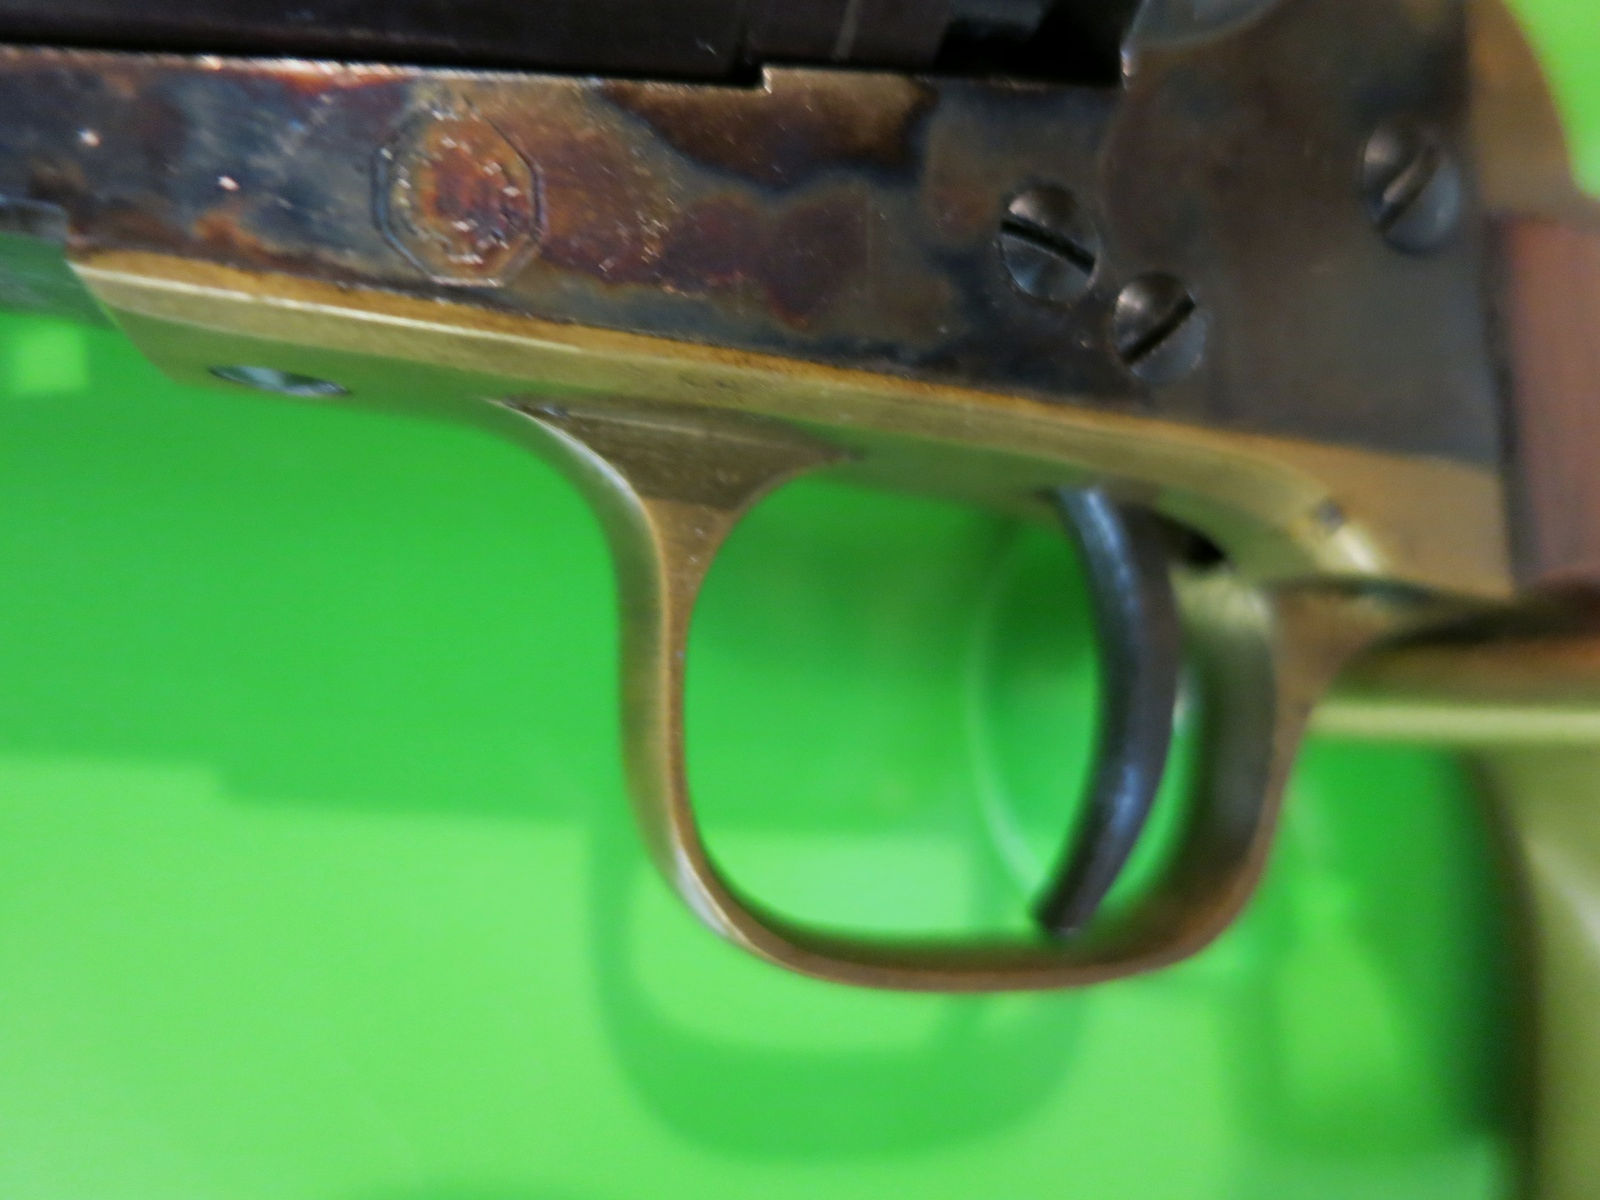 Perkussions-Revolver, Hege Uberti , Modell 1862 Police, .36BP      #68